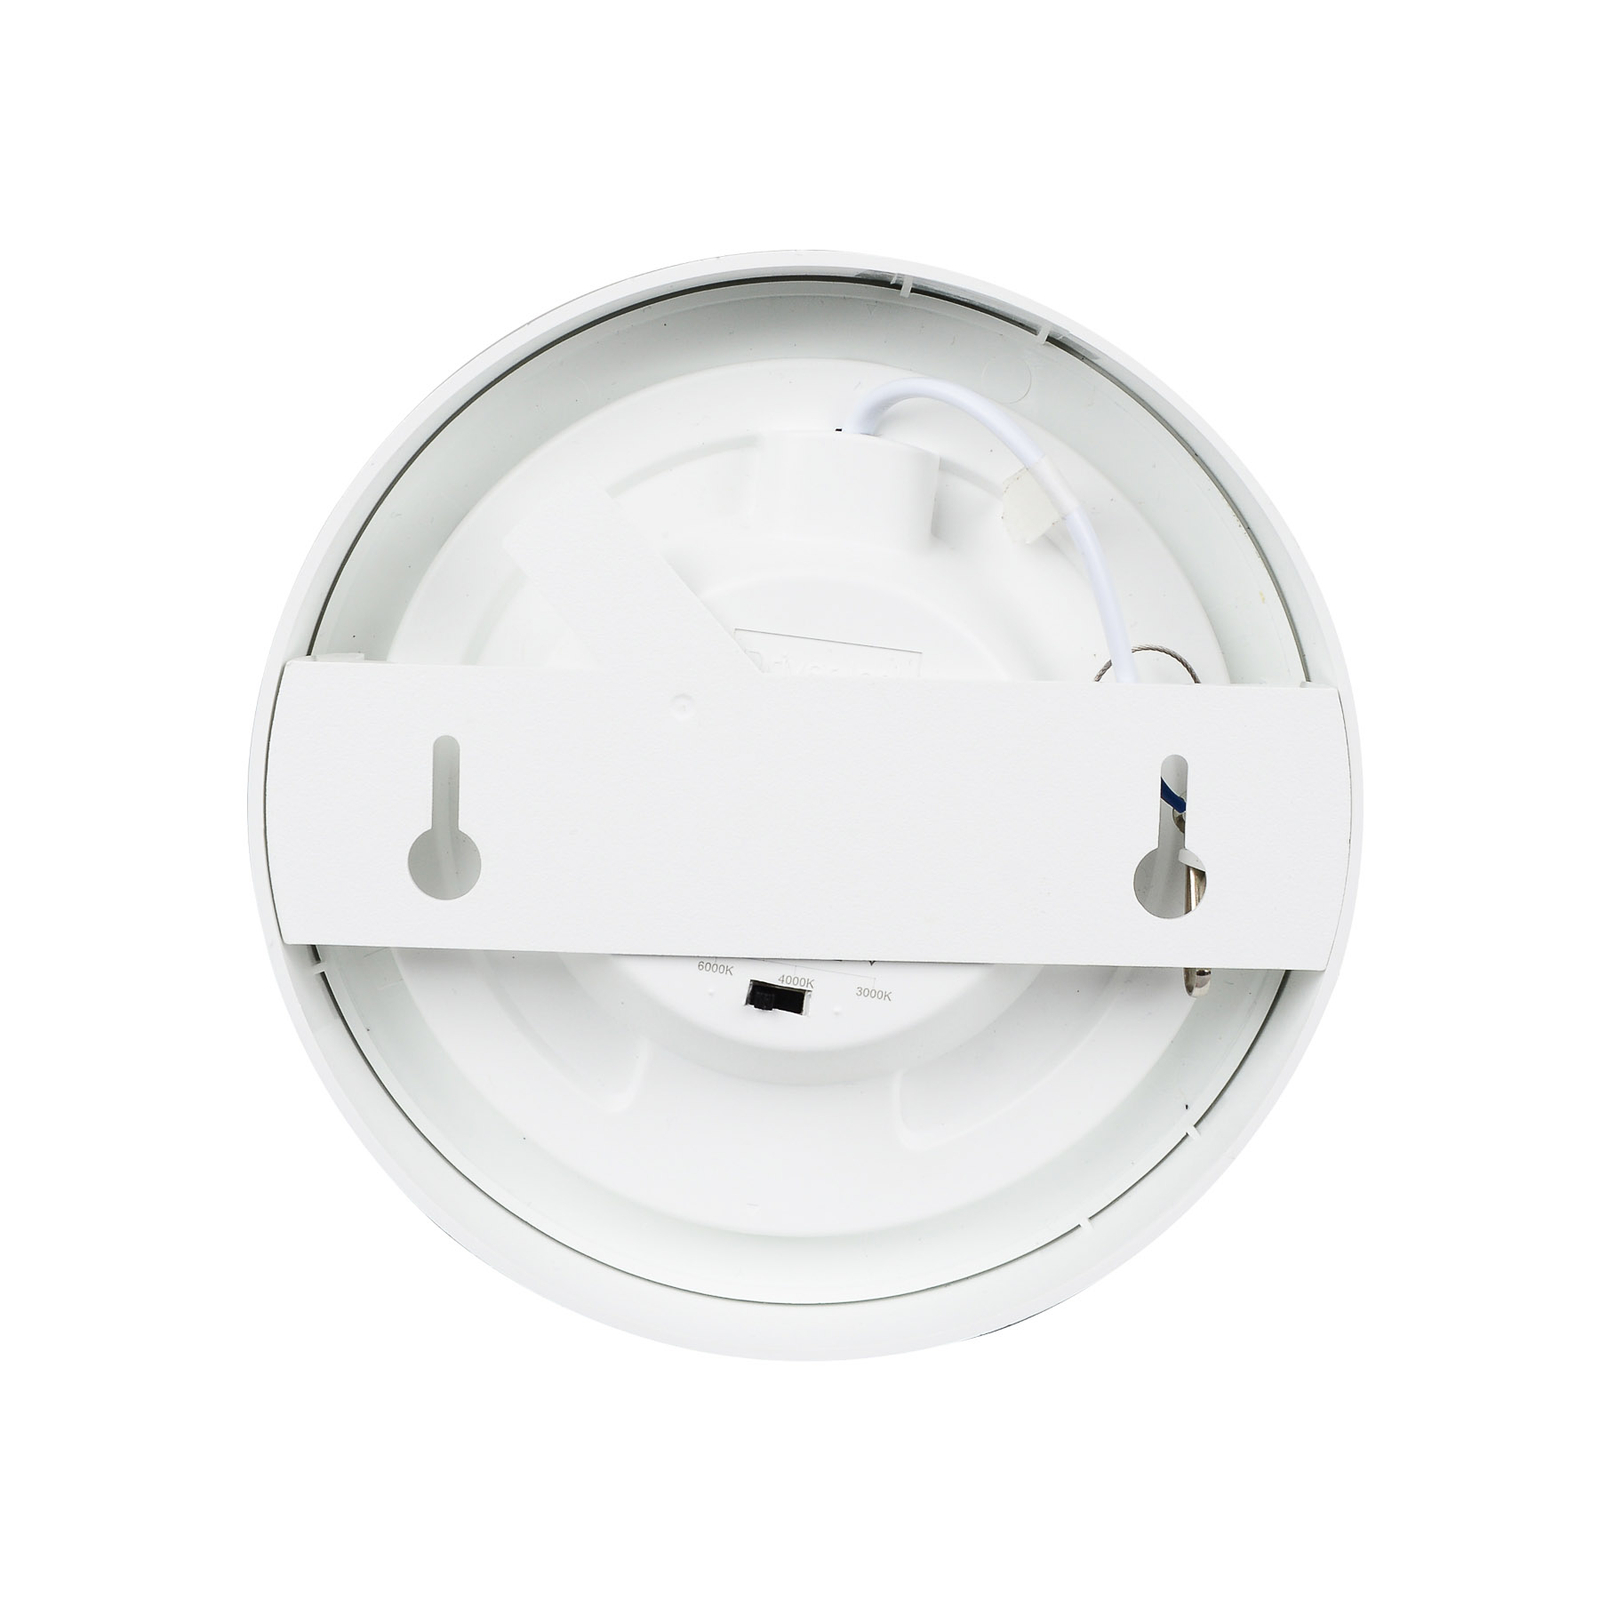 Prios Edwina LED-Deckenlampe weiß 17,7cm 3er-Set